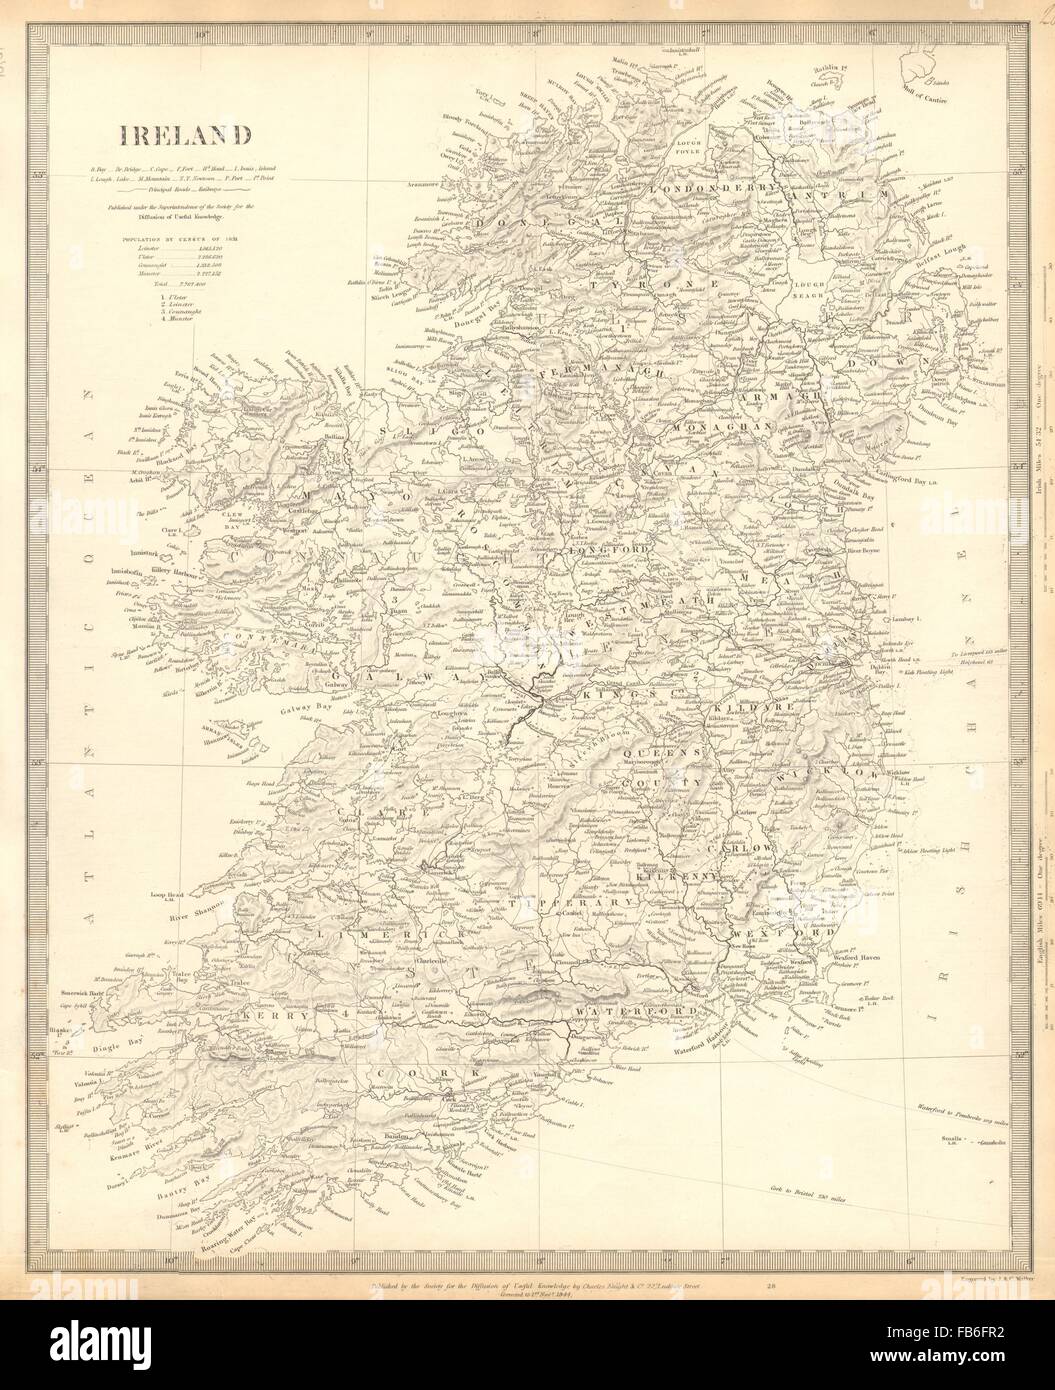 IRELAND: Showing roads and railways. SDUK, 1848 antique map Stock Photo